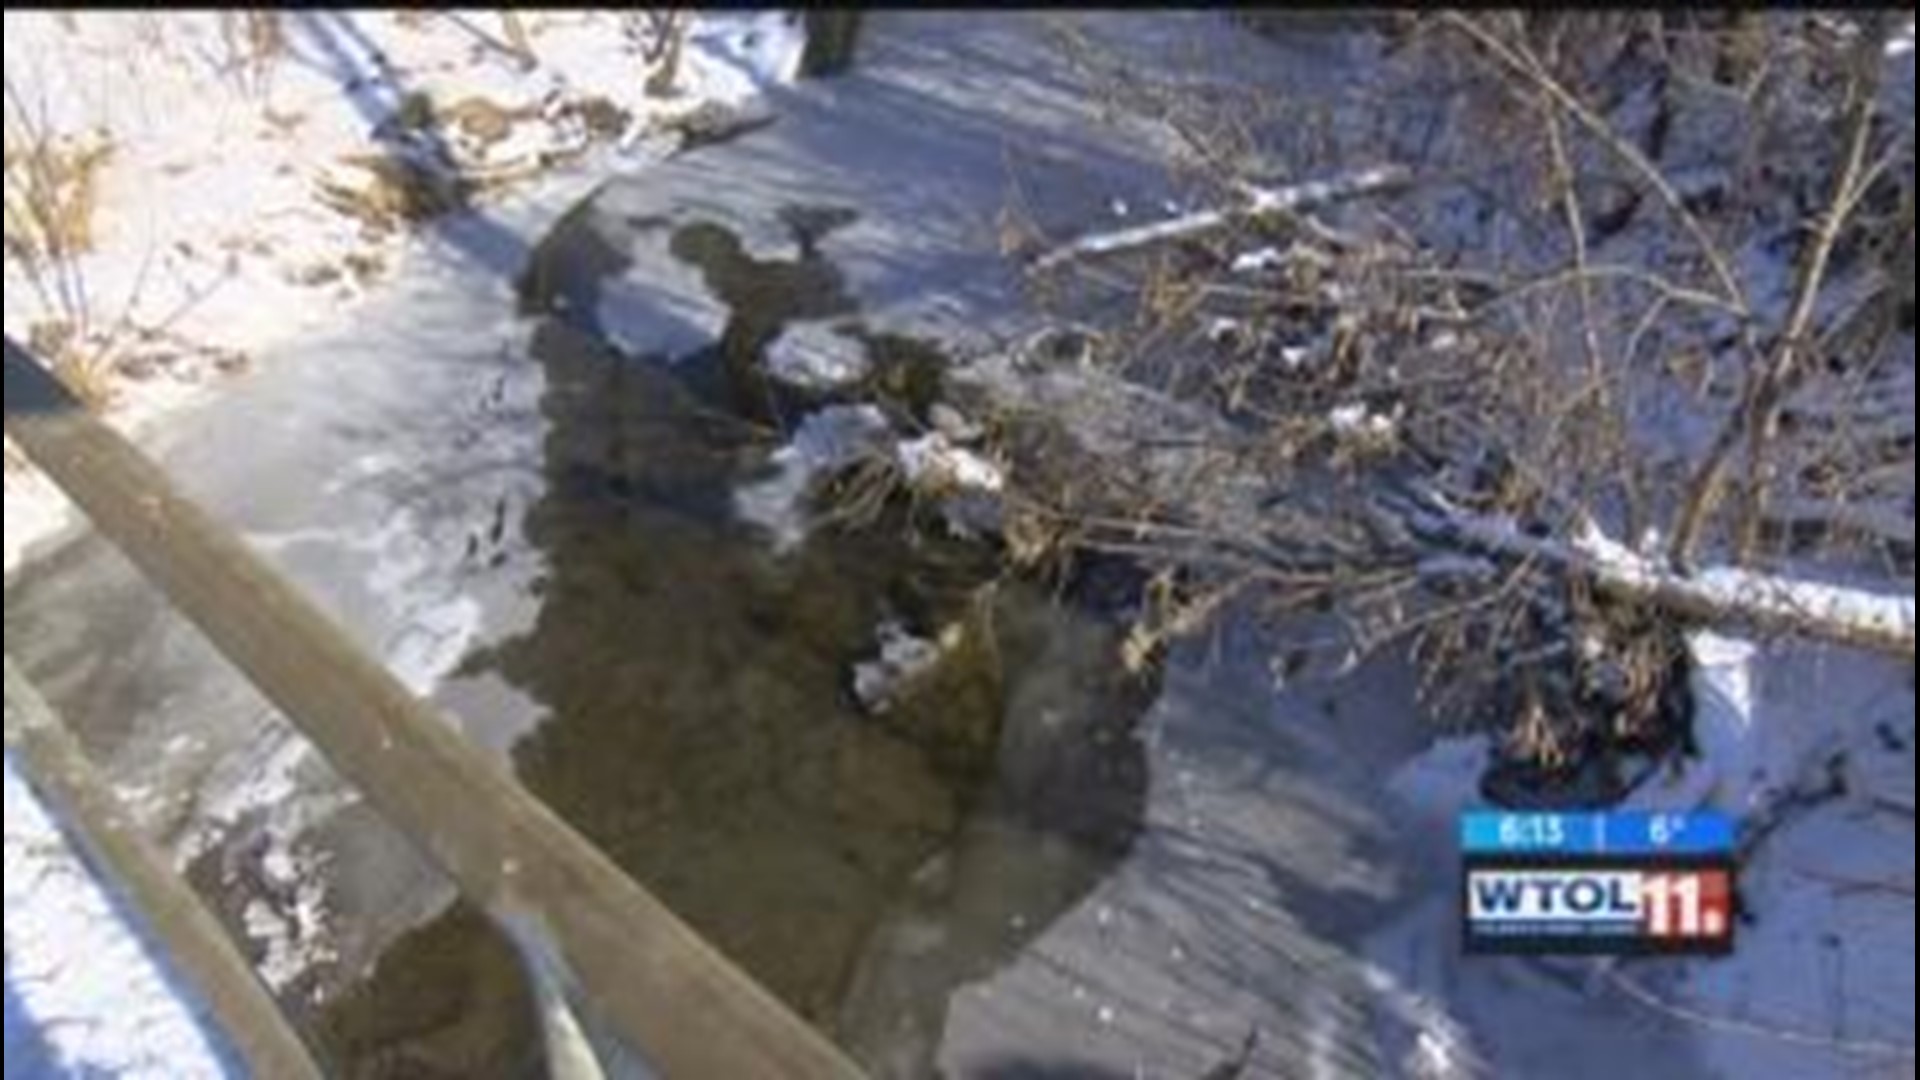 Village of Walbridge to use EPA grant to clean Cedar Creek